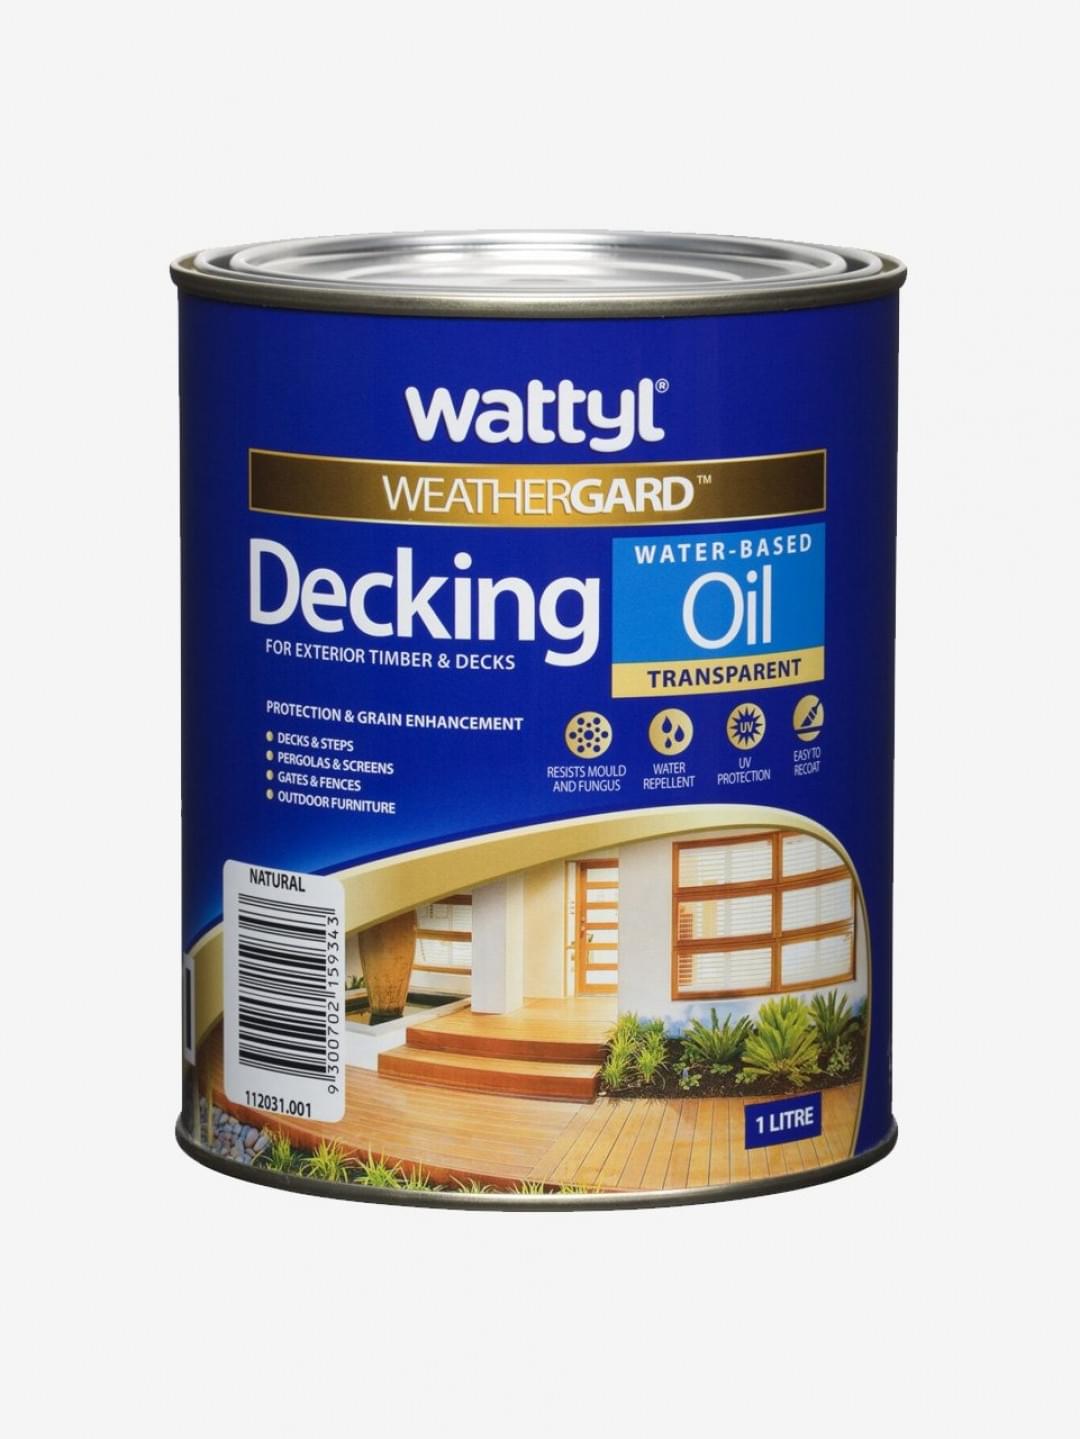 Wattyl Weathergard Decking Water-Based Oil from Amtrac